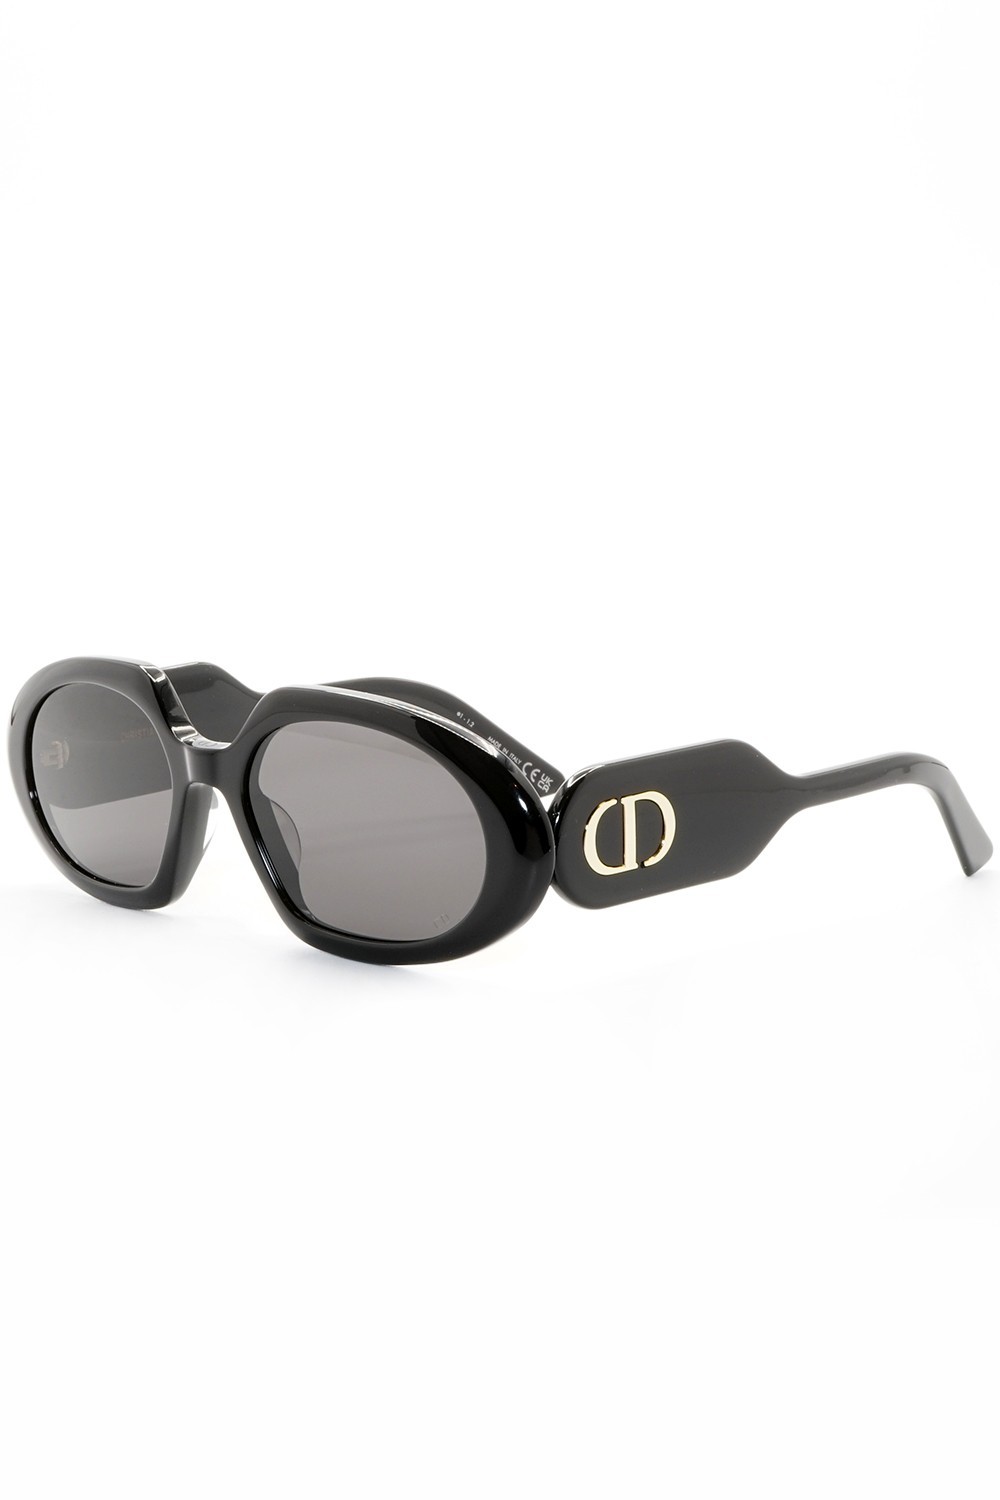 Christian Dior - Occhiali da sole in celluloide ovali unisex nero - R2U 10A0